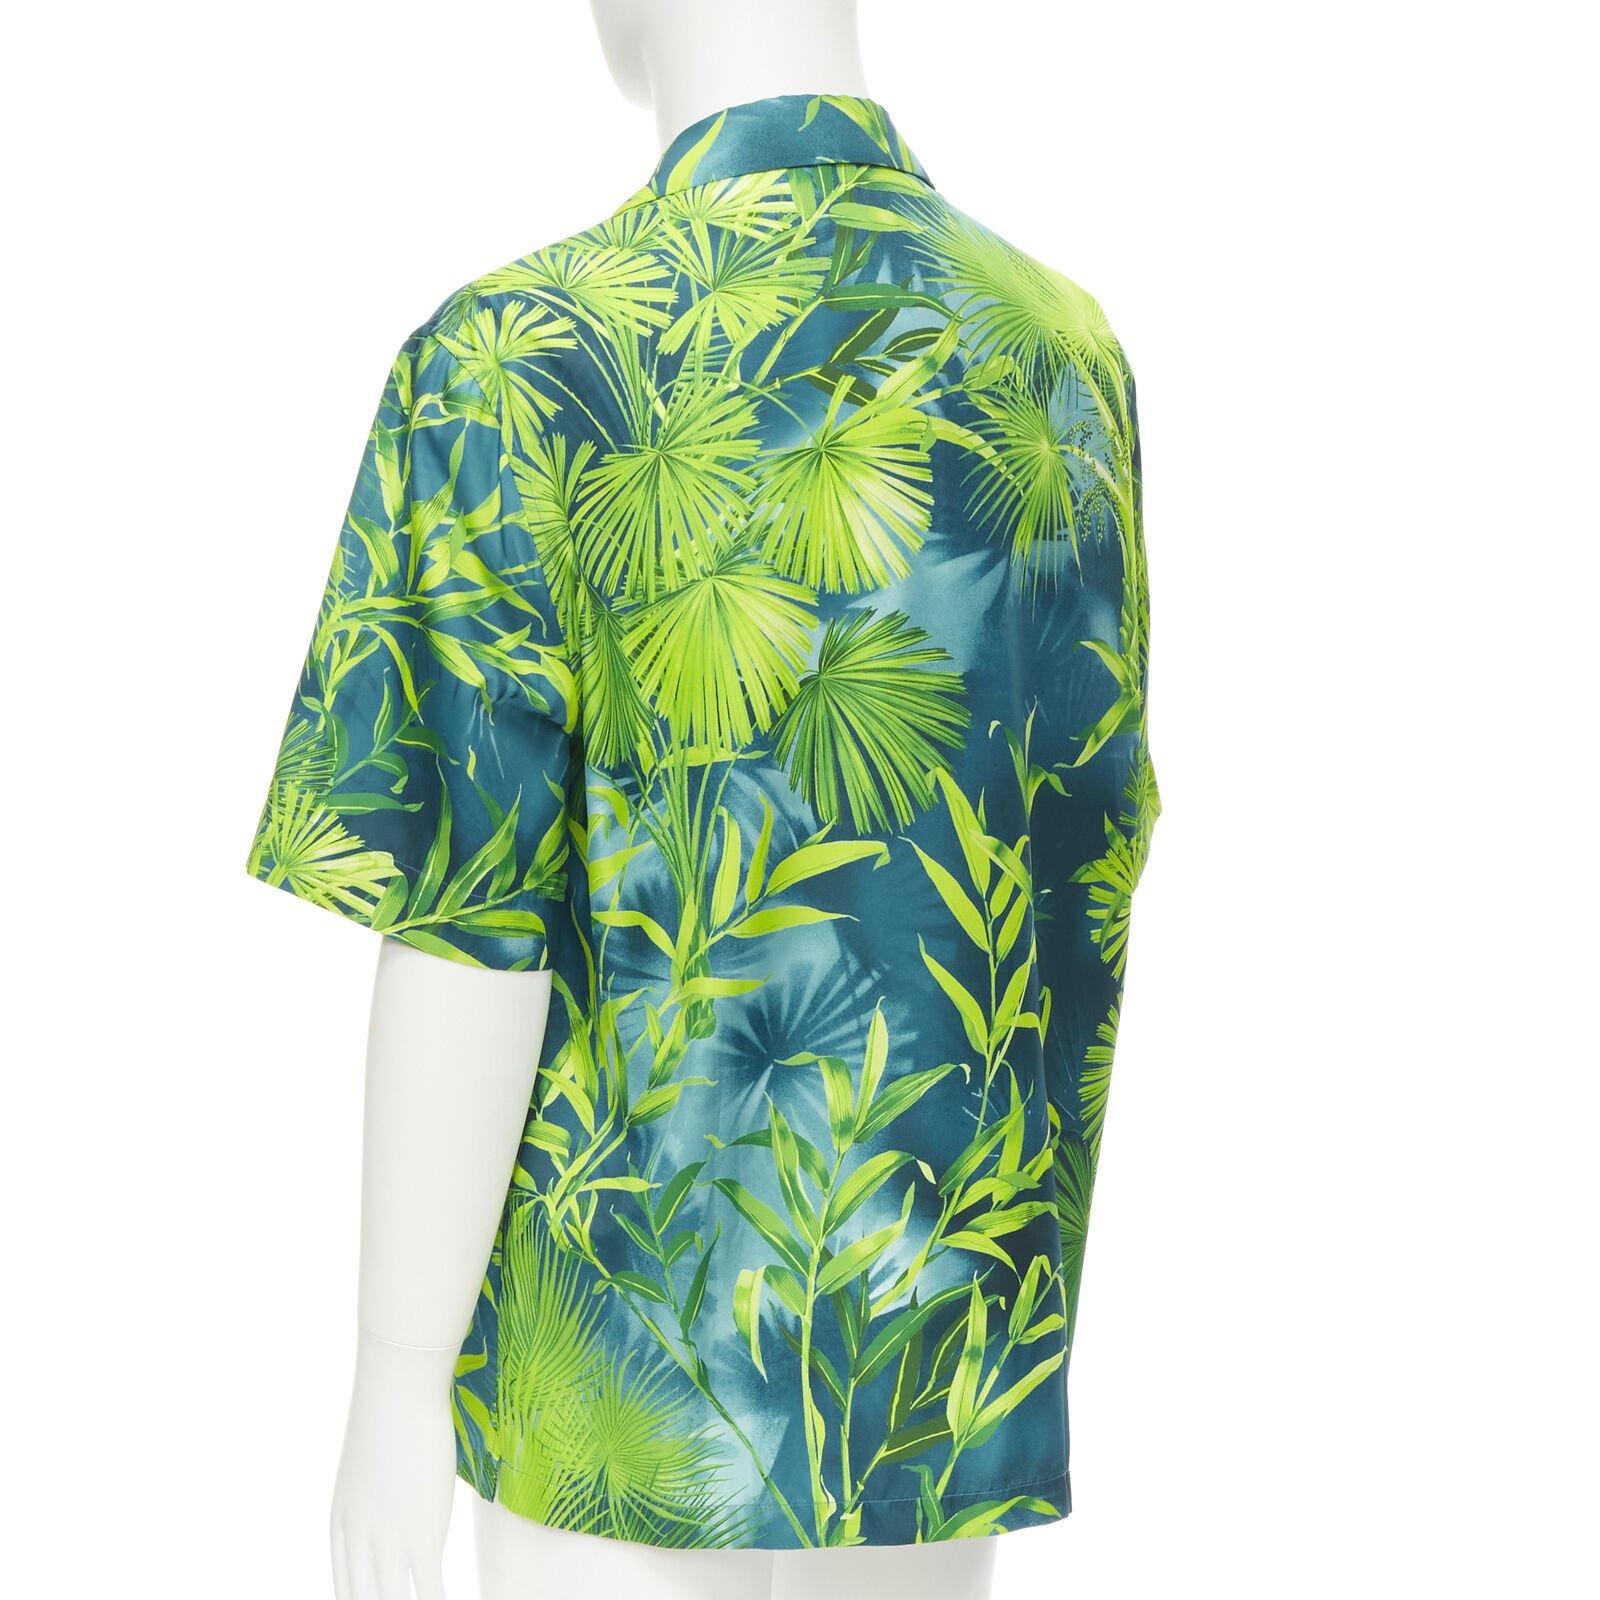 VERSACE 2020 Iconic JLo Jungle print green tropical print shirt EU38 S For Sale 2